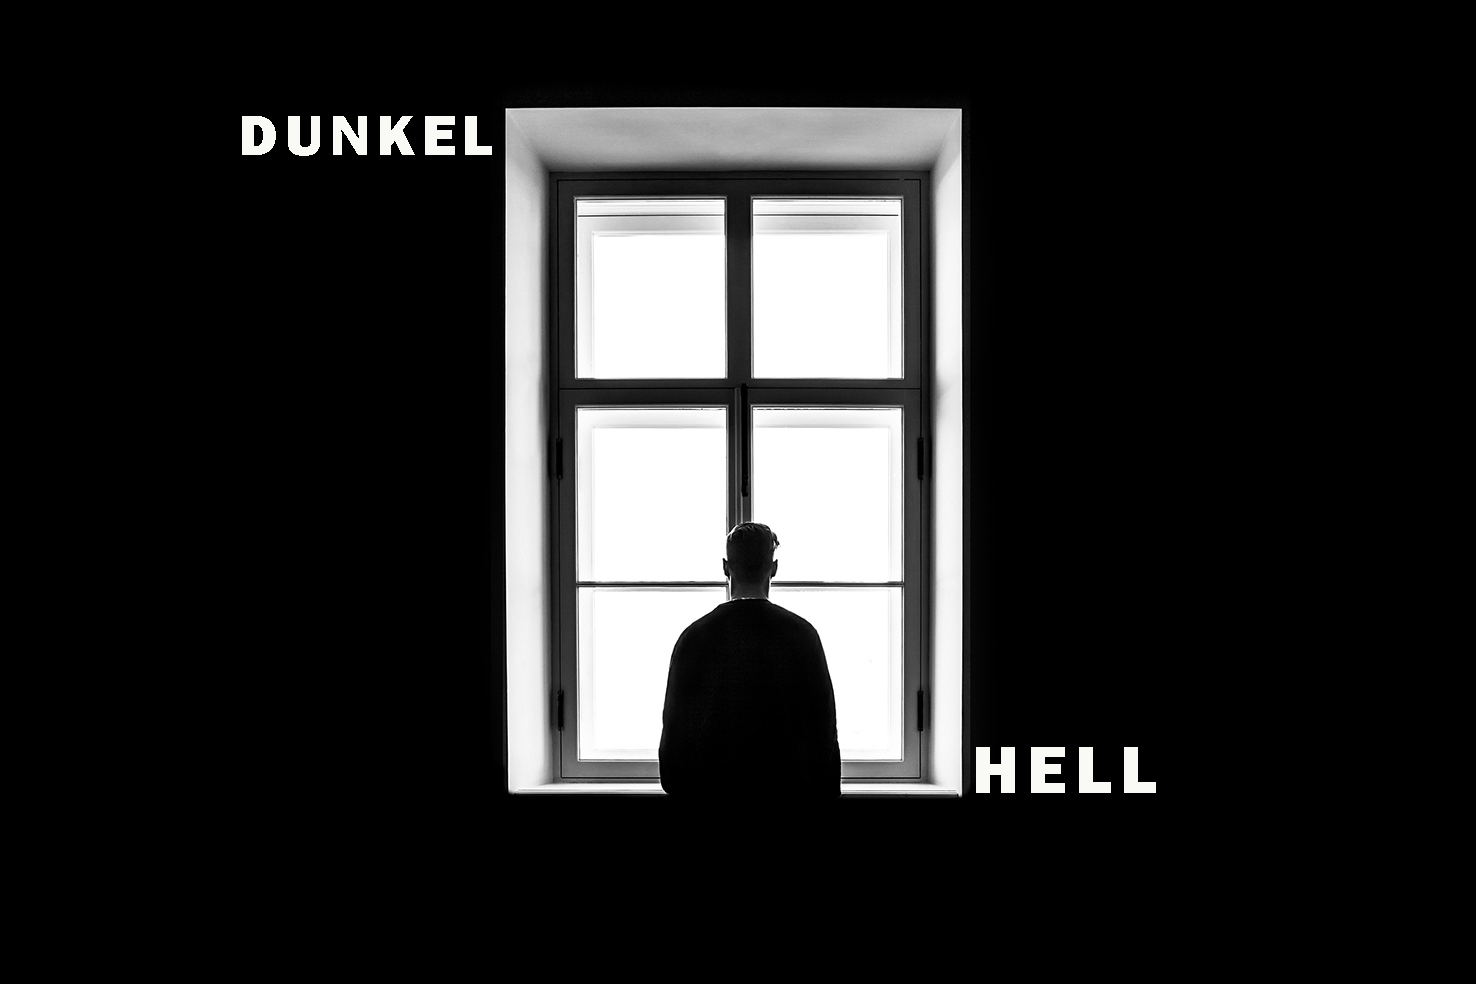 Dunke_Hell (c) frei